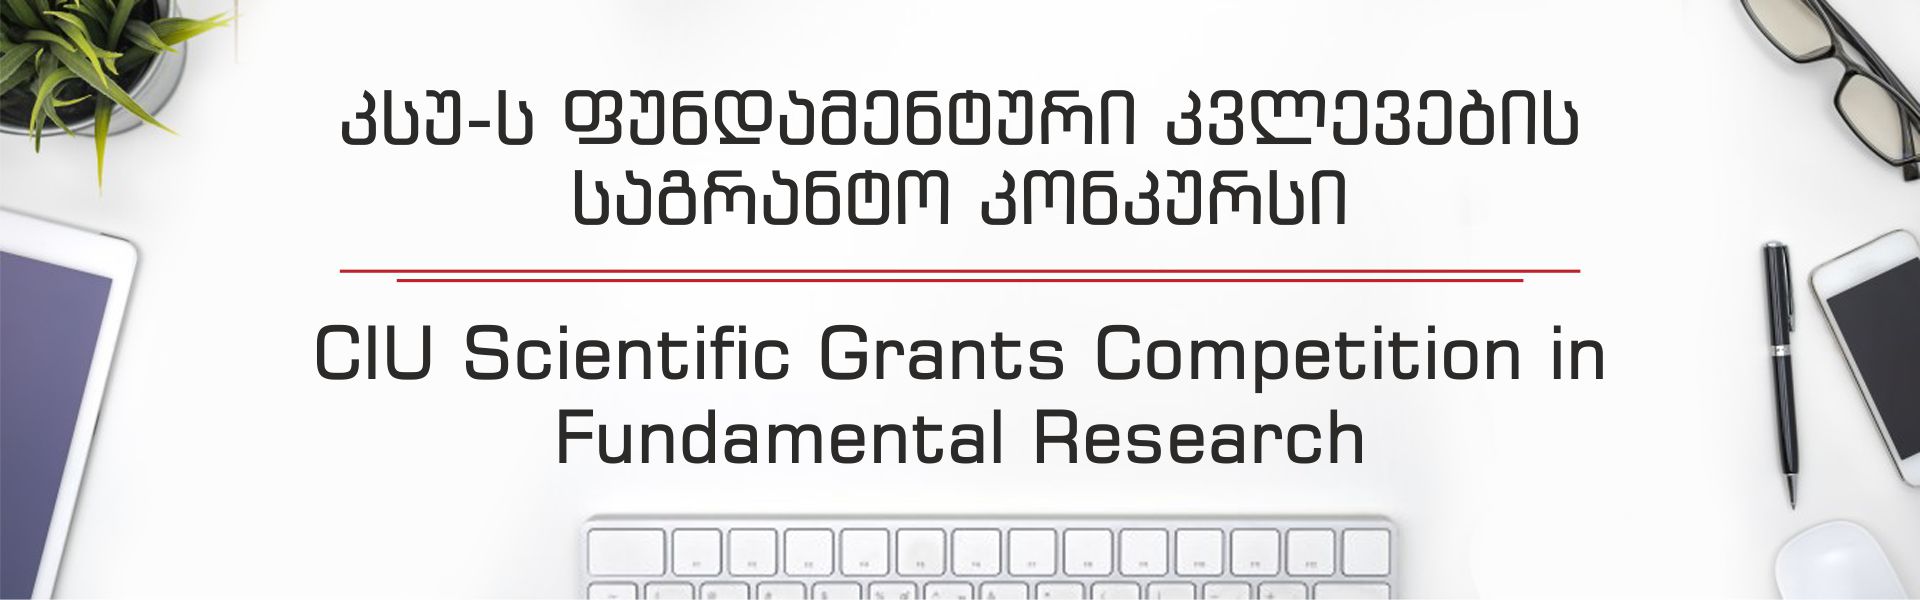 CIU Scientific Grants Competition in Fundamental Research 2018